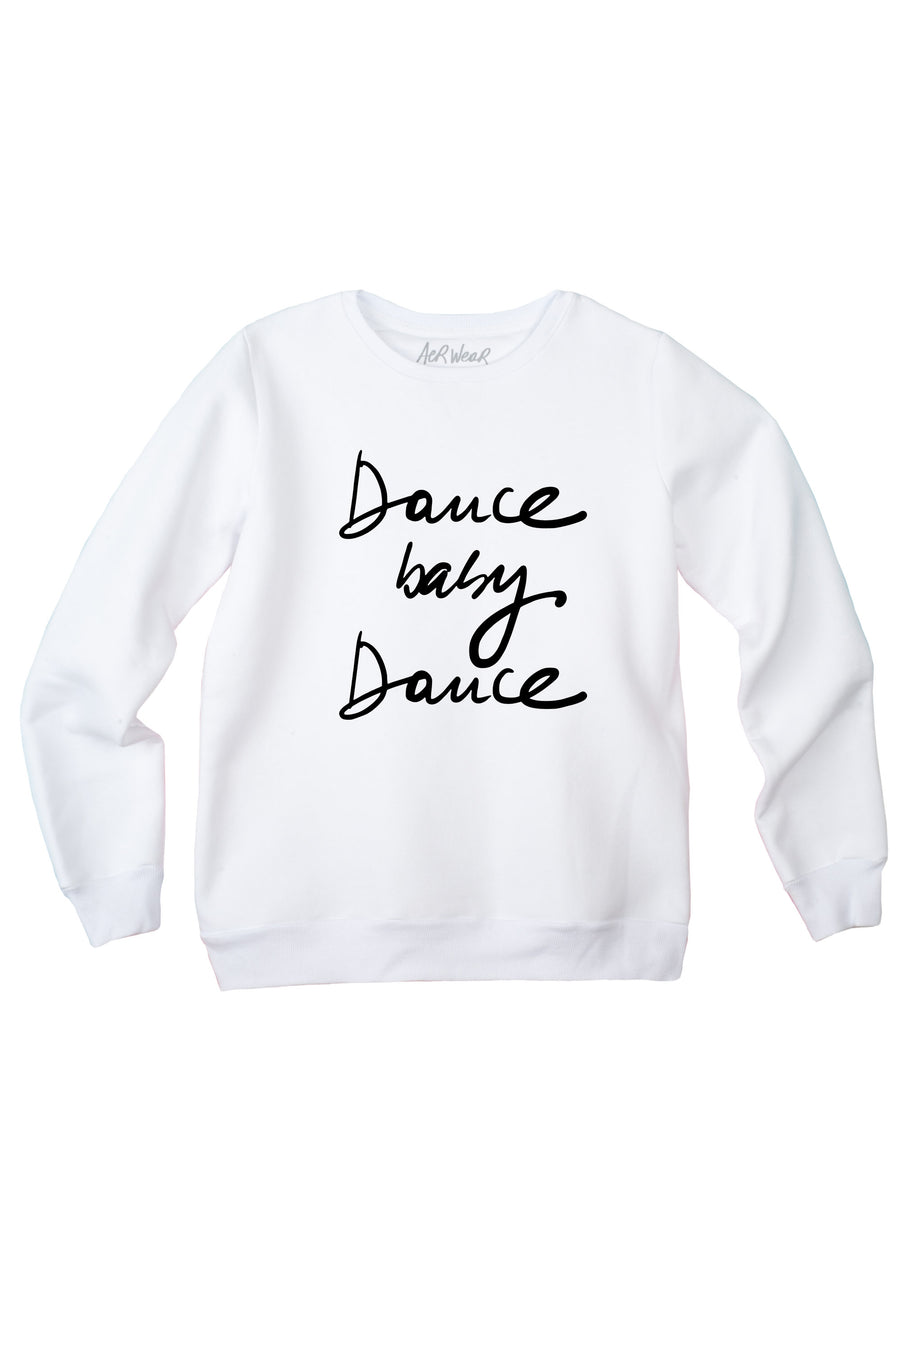 DANCE BABY, DANCE  sweatshirt